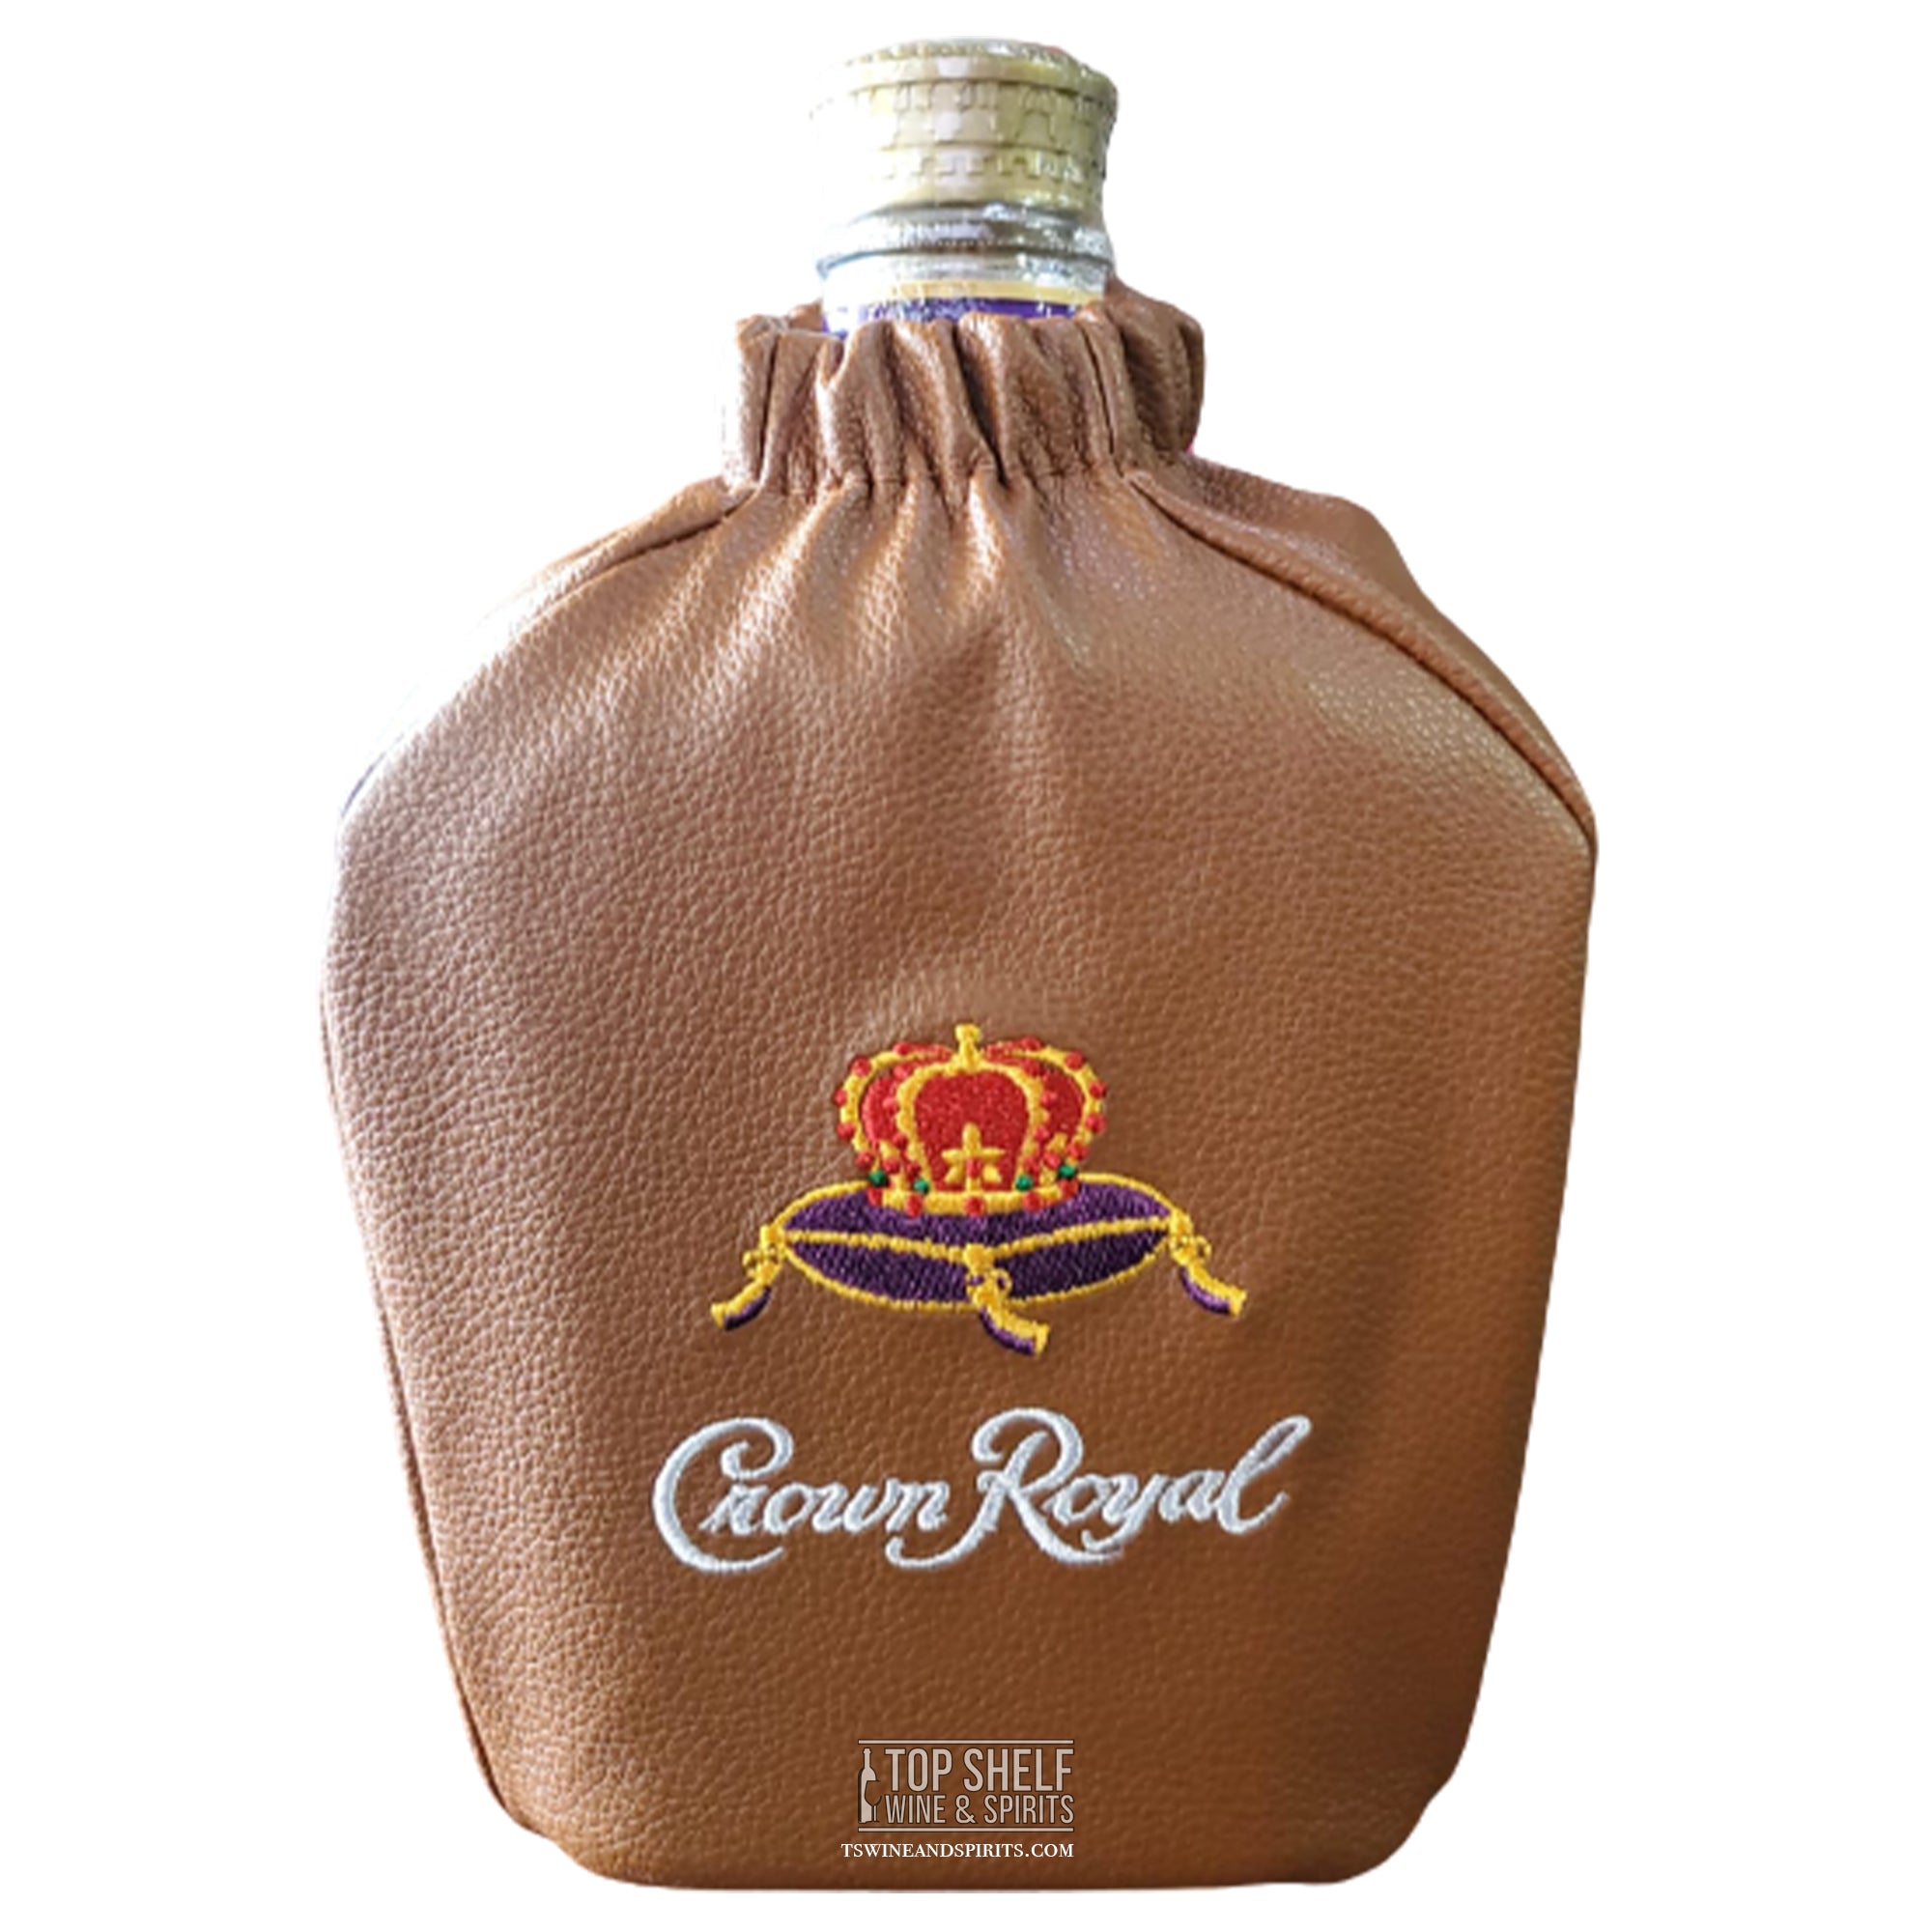 Cylinder Bucket Leather Bag in Regal Royal Blue | Silver & Riley